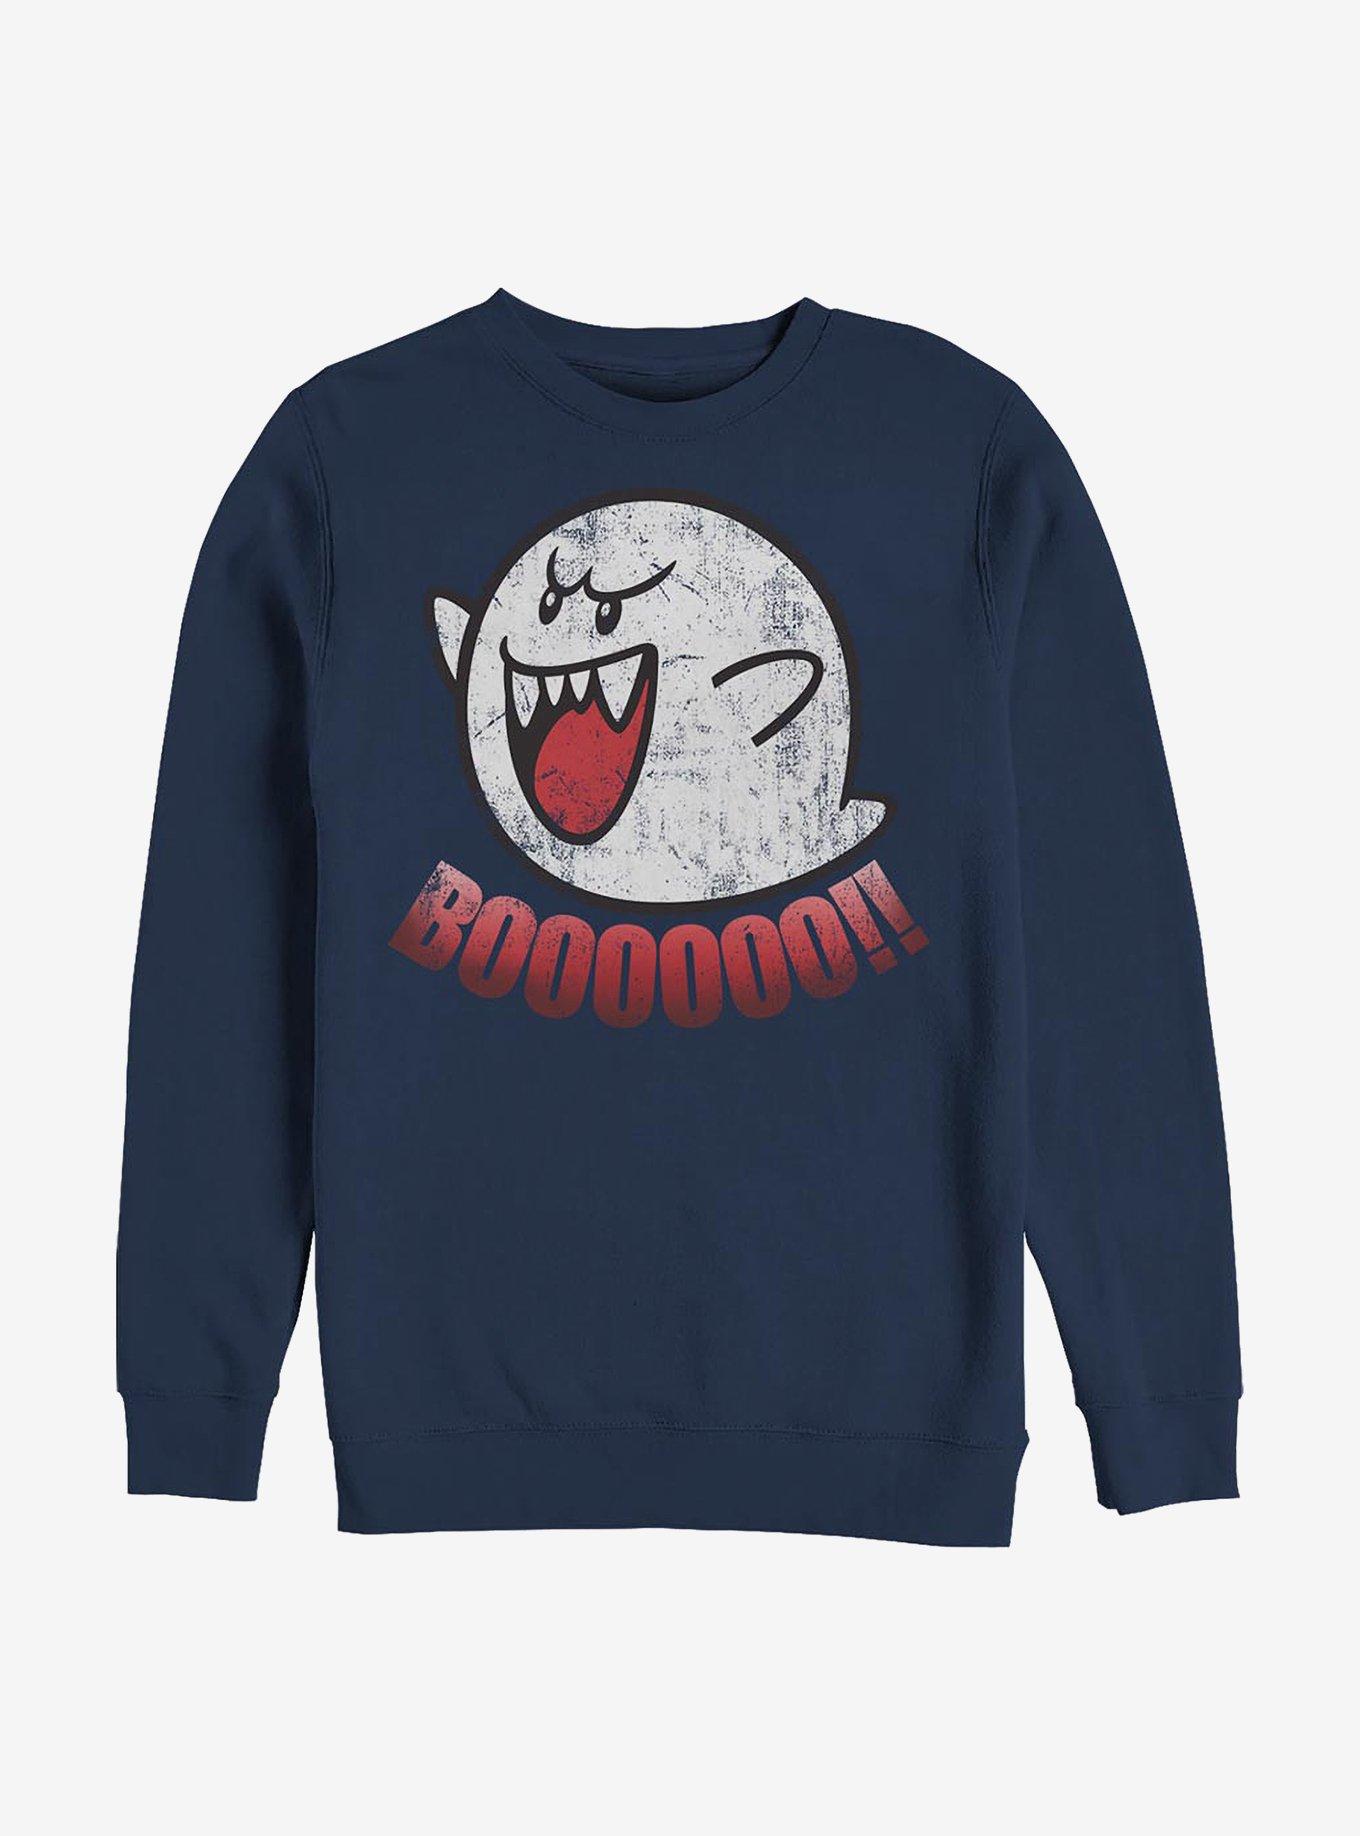 Nintendo Boo Ghost Sweatshirt, NAVY, hi-res